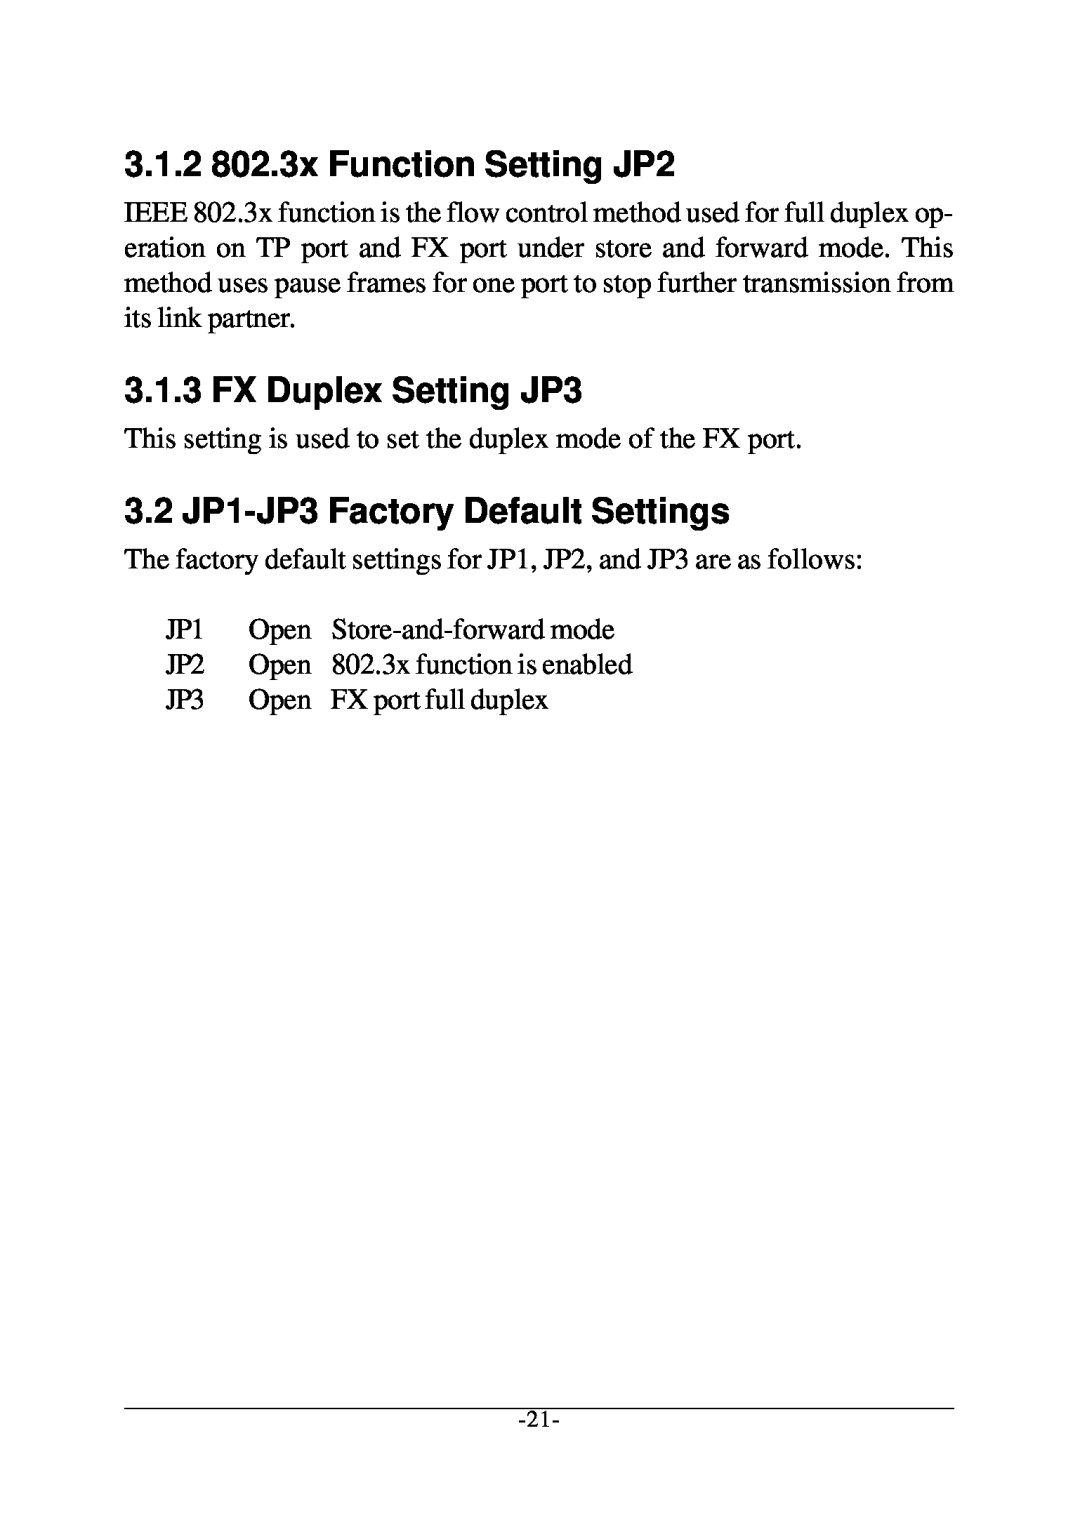 KTI Networks KC-300D manual 3.1.2 802.3x Function Setting JP2, FX Duplex Setting JP3, 3.2 JP1-JP3 Factory Default Settings 